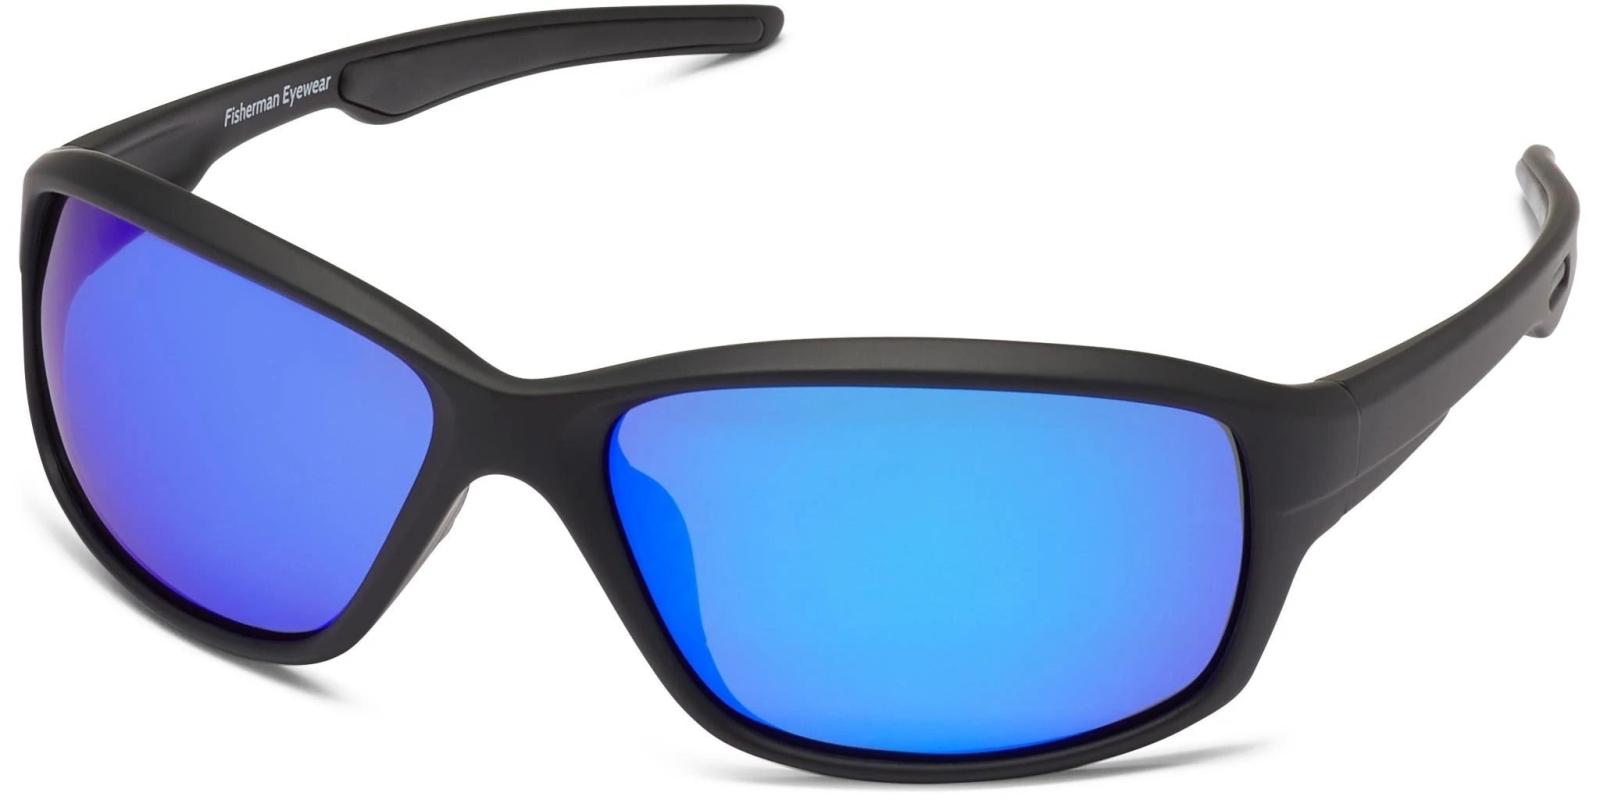 icu Eyewear Dorado Sunglasses